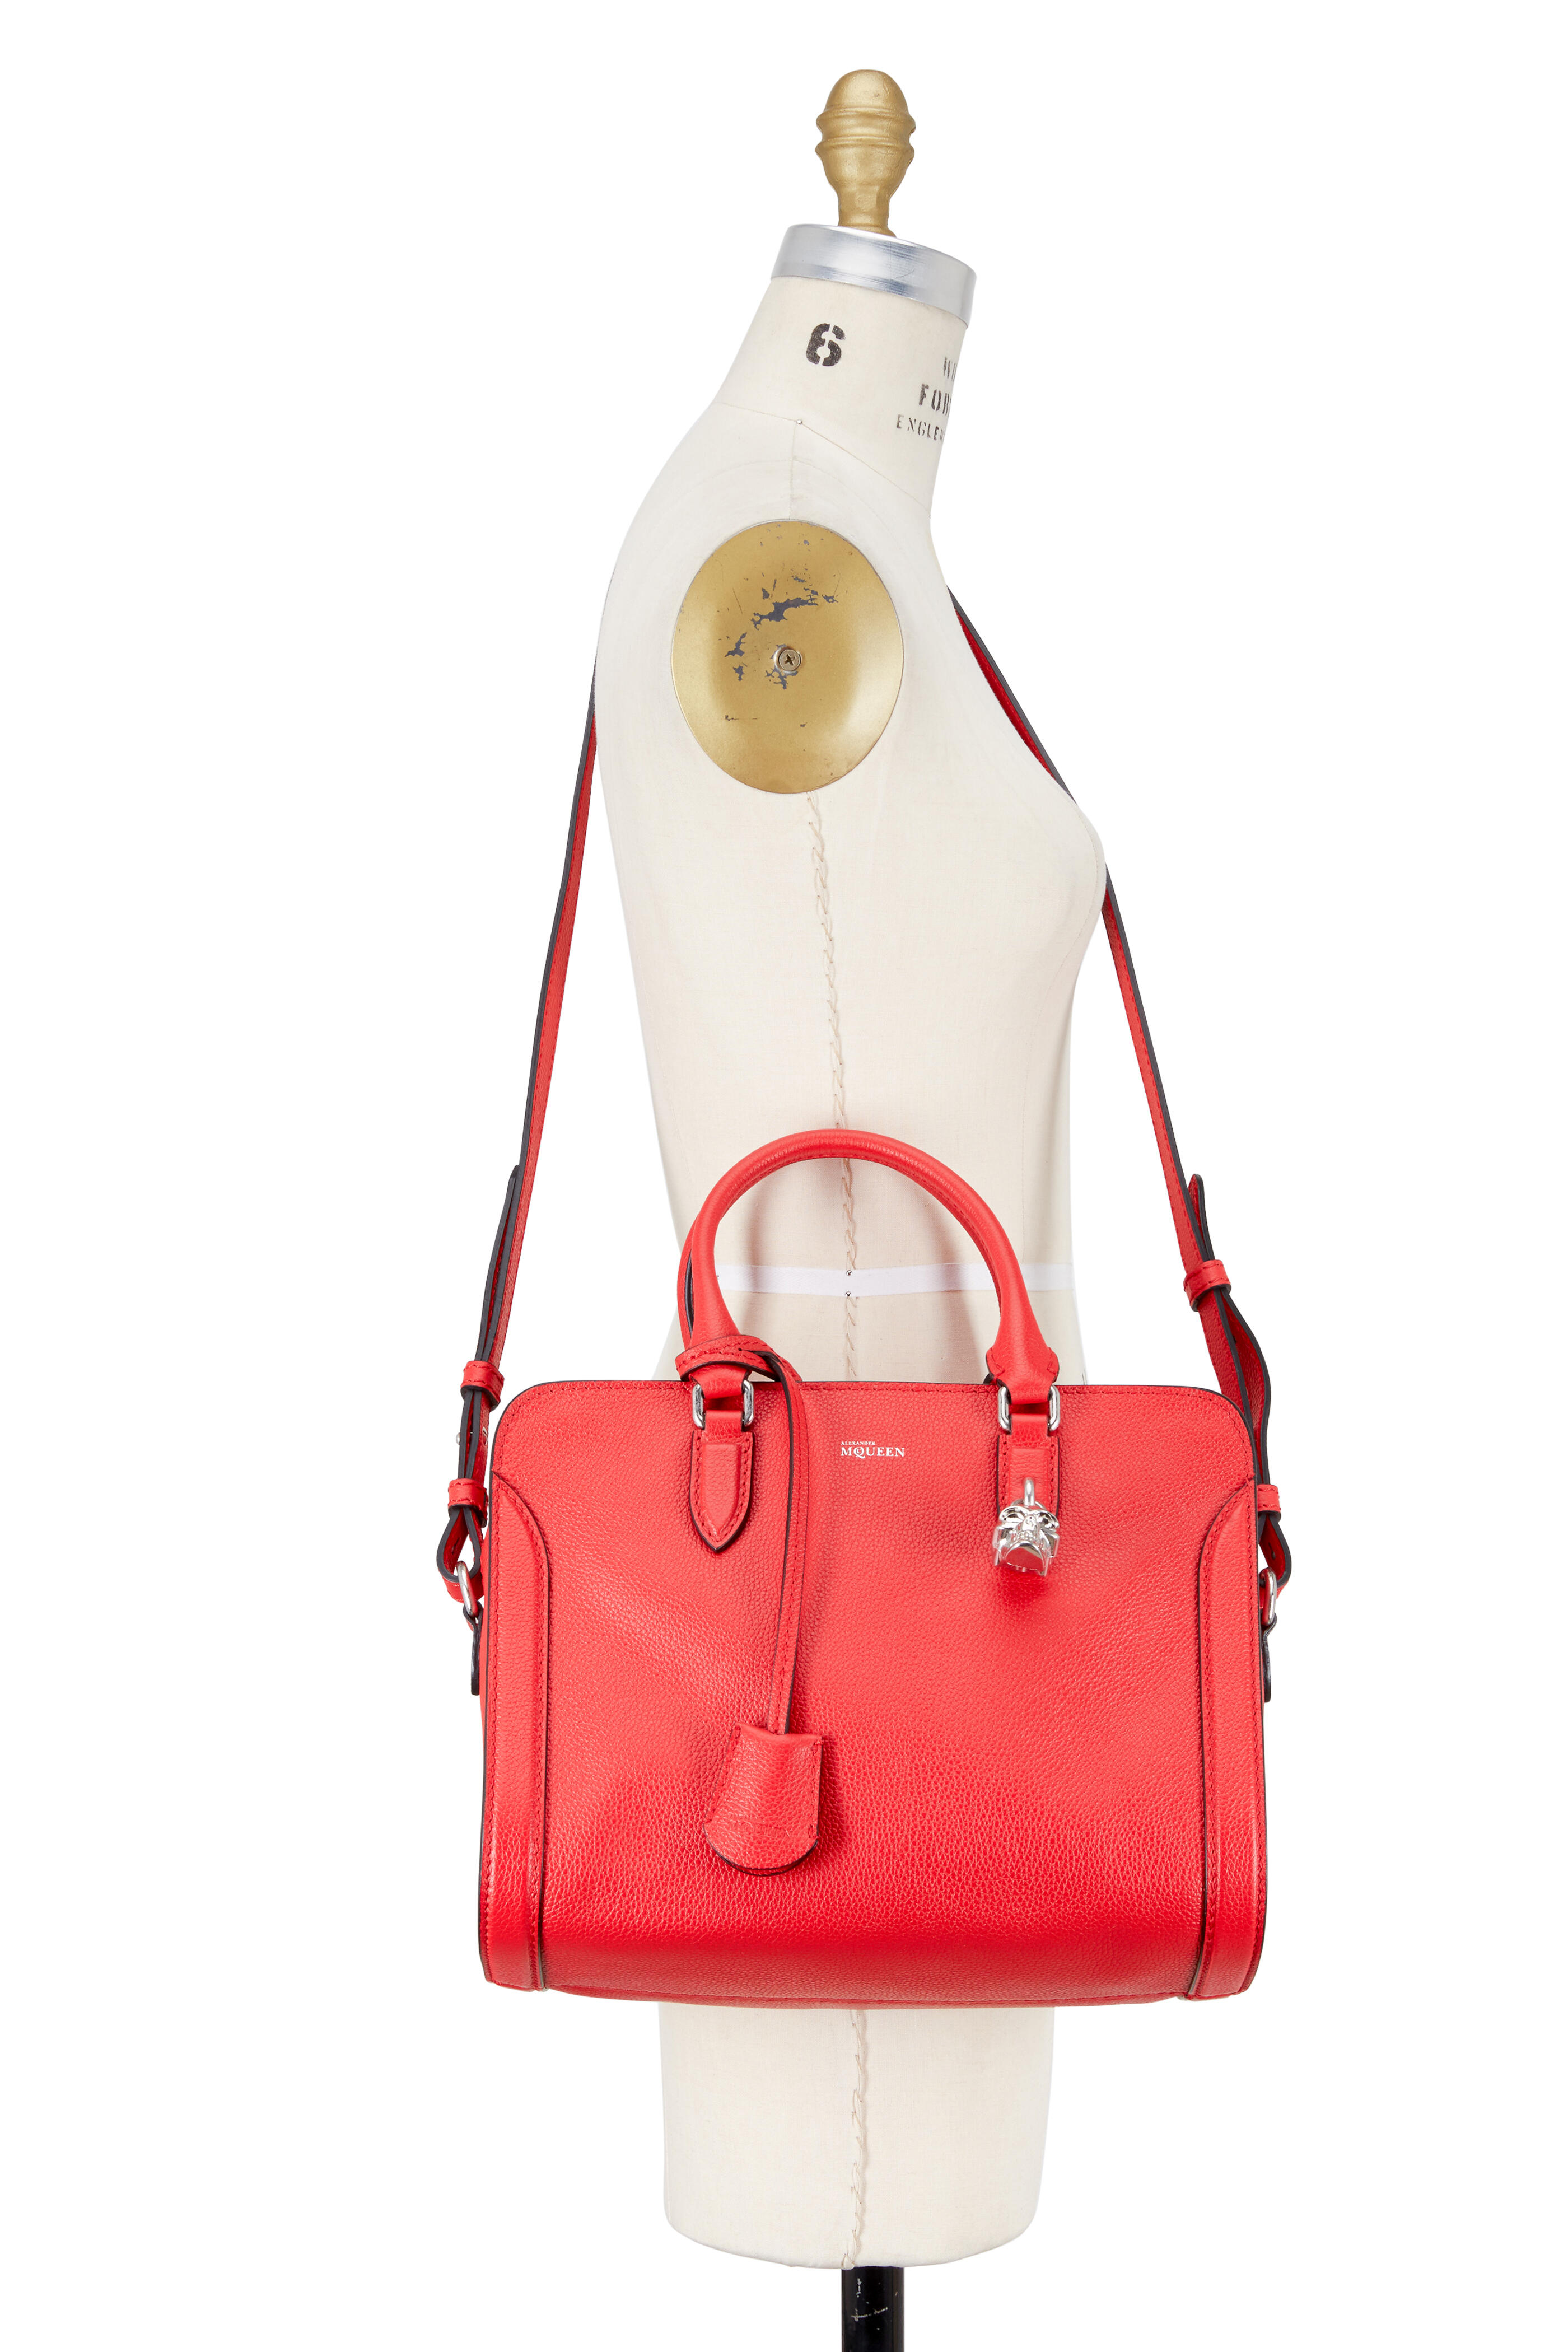 Alexander McQueen - Padlock Red Textured Leather Small Shoulder Bag